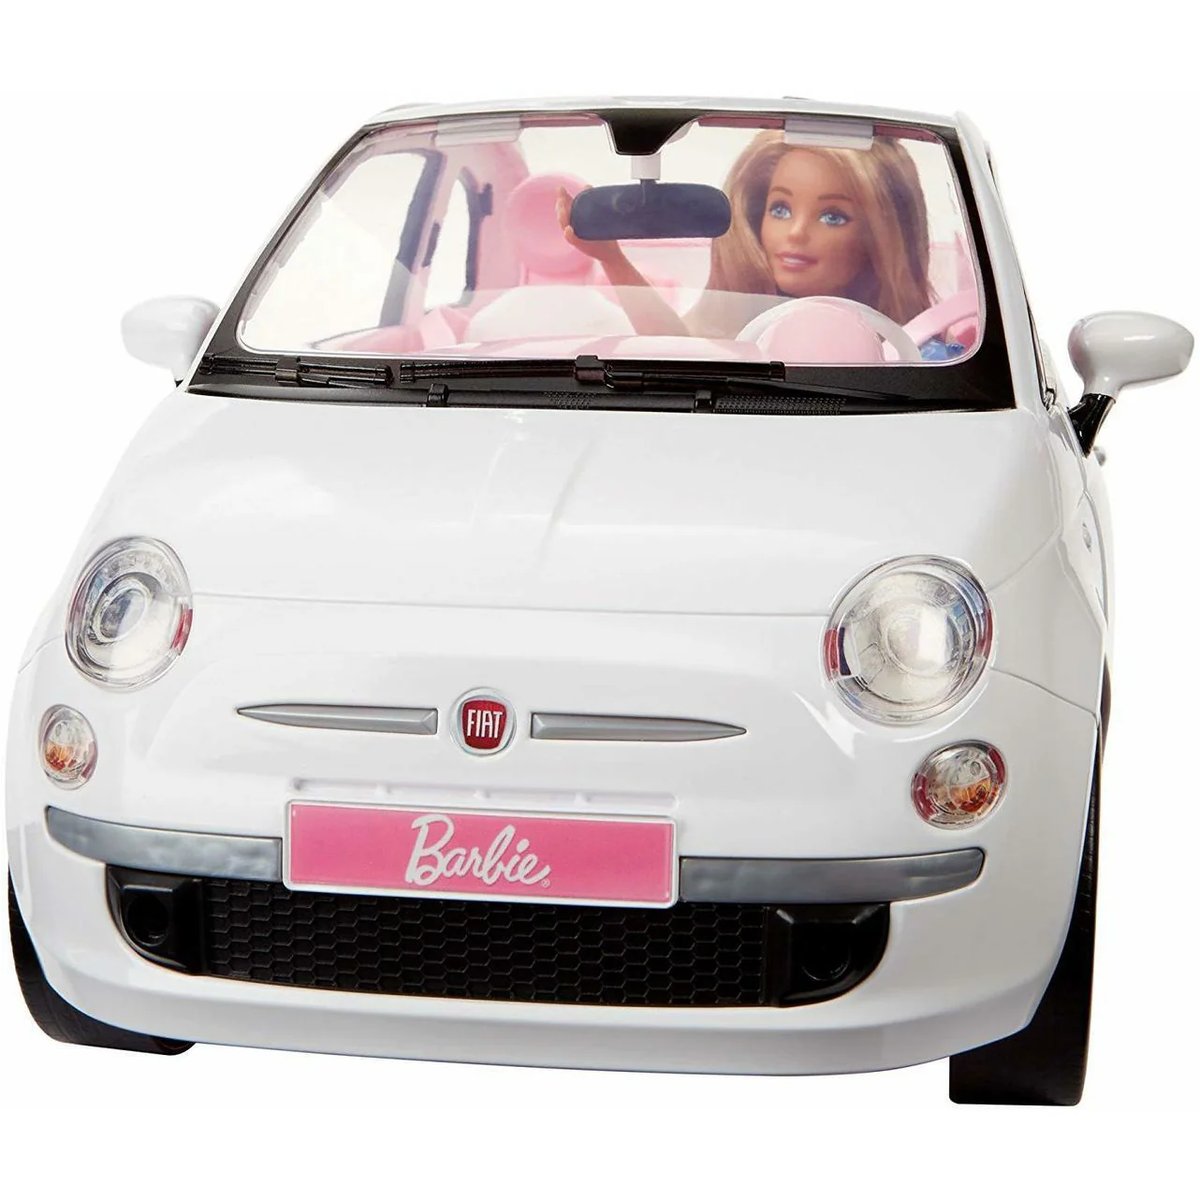 Barbie Fiat 500 Car and Verishop